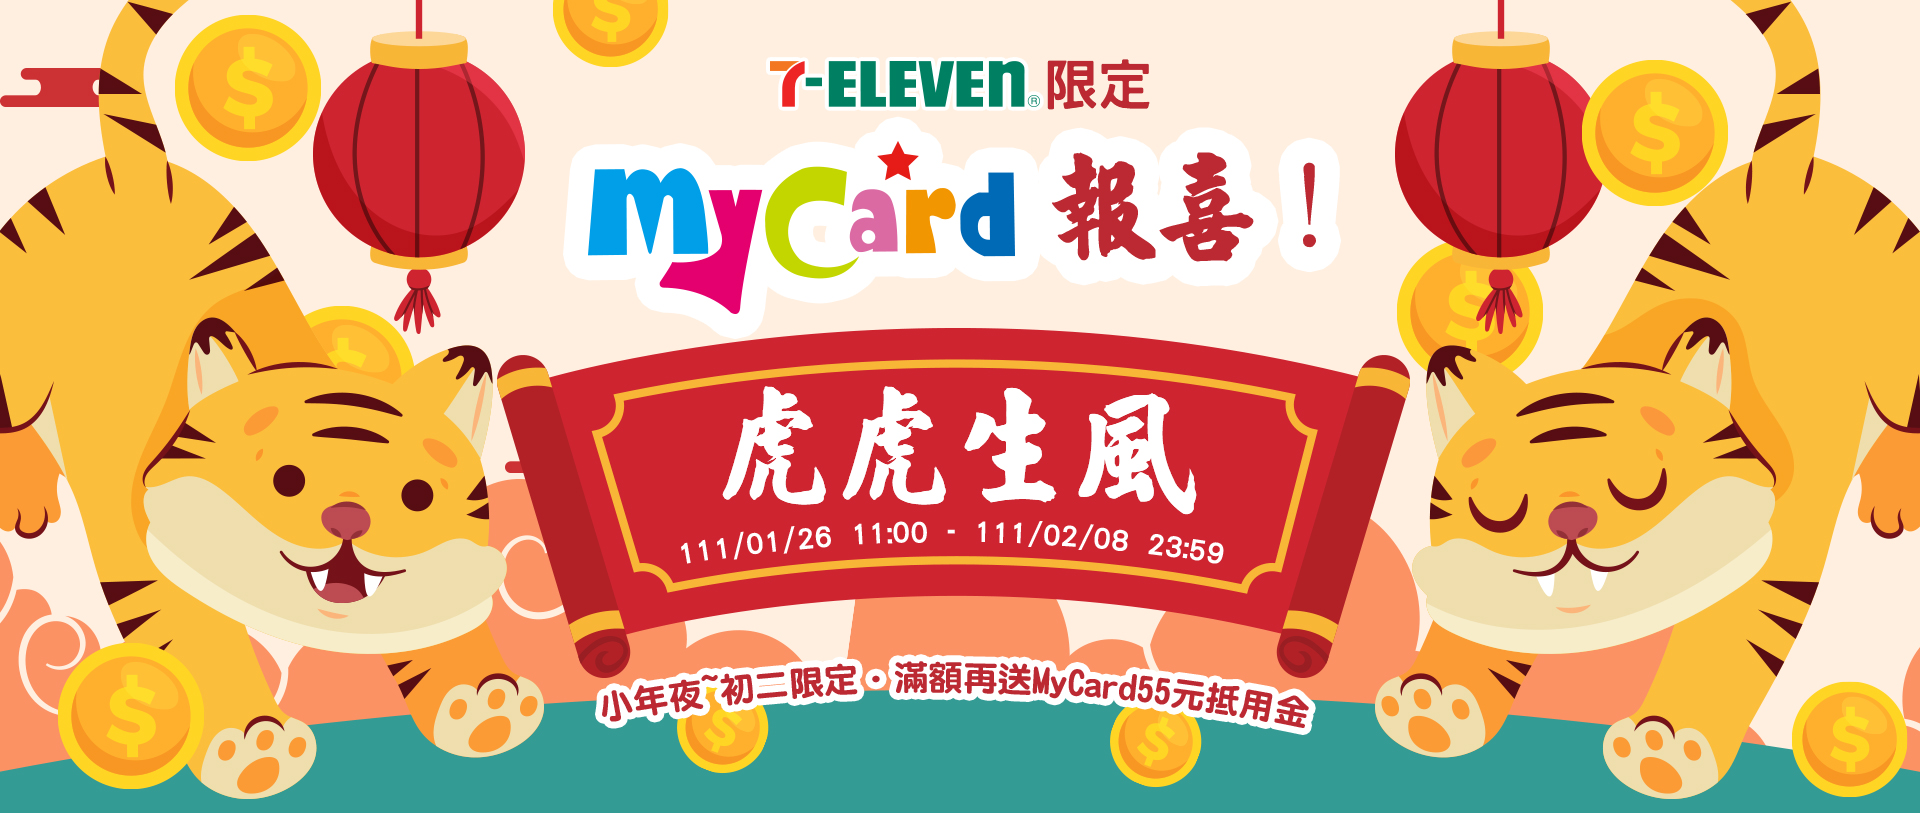   7-ELEVEN X MyCard 報喜 虎虎生風